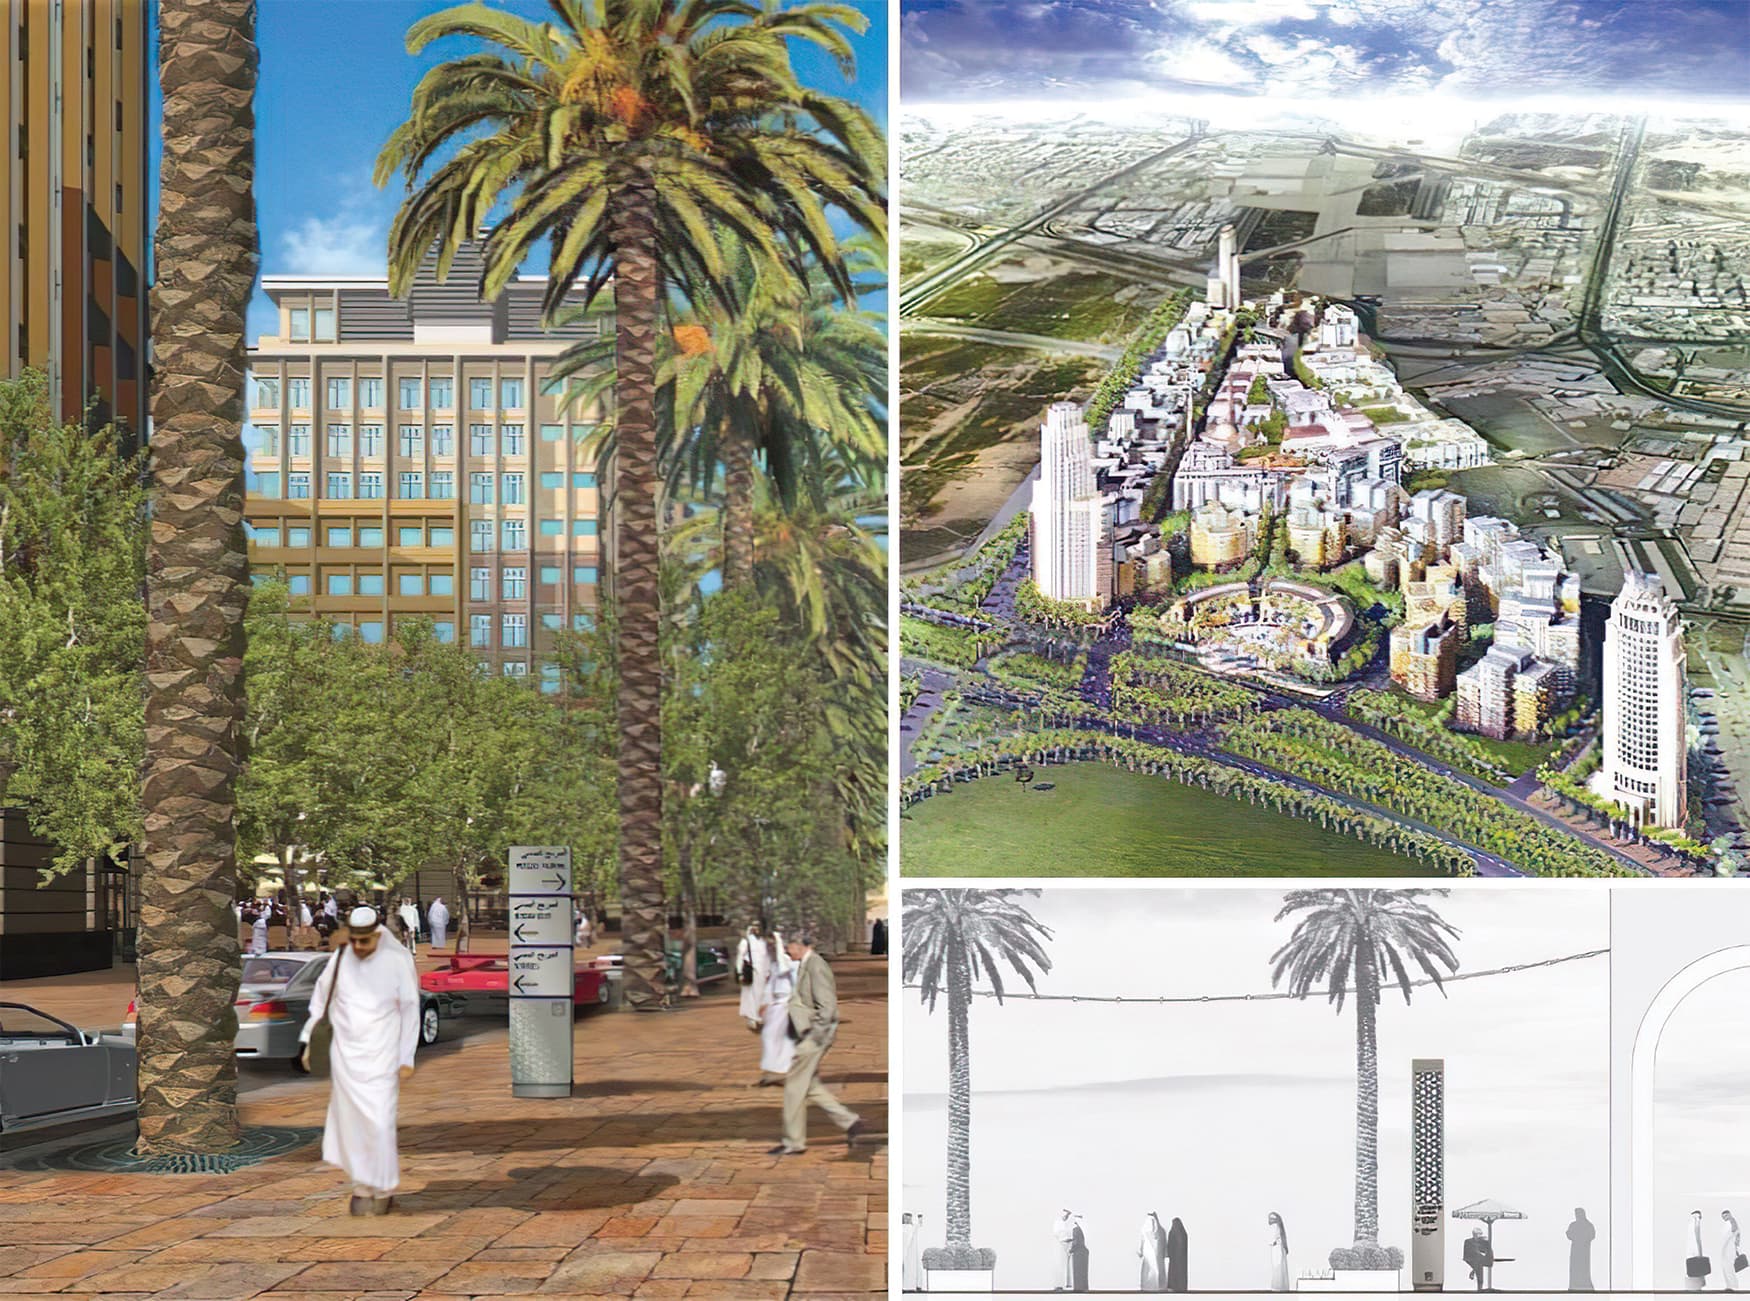 Jeddah Gate, a large master-planned downtown community. Pedestrian Wayfinding Design.